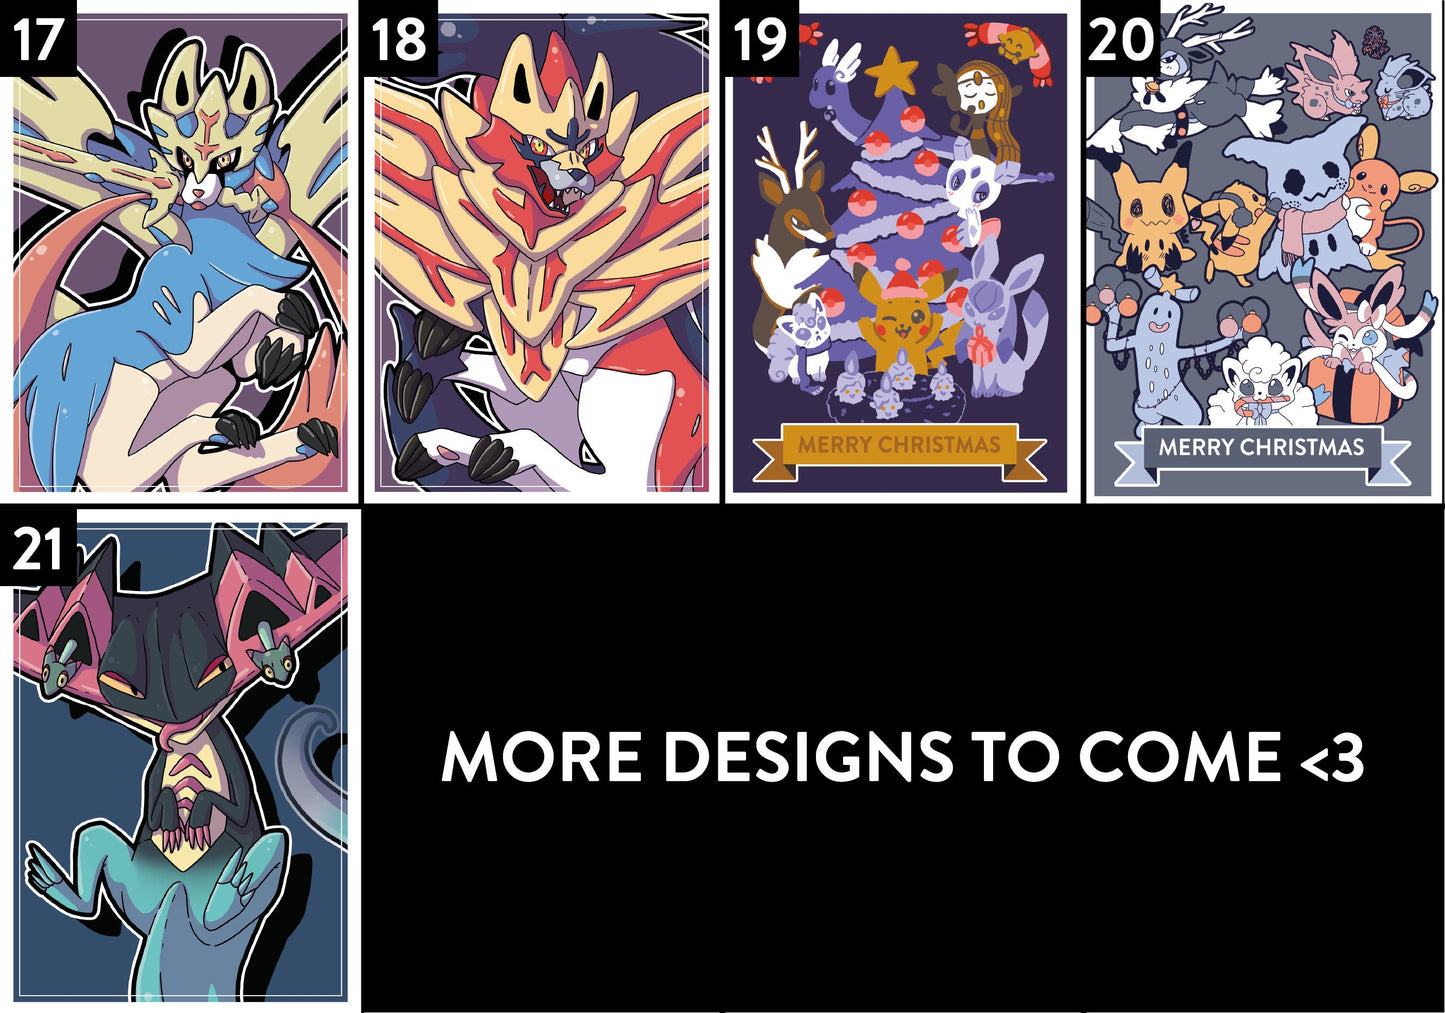 Pokemon Fanart Postcards & Other Designs - Cute Fanart Postcards, Digimon Greeting Cards, OC Art